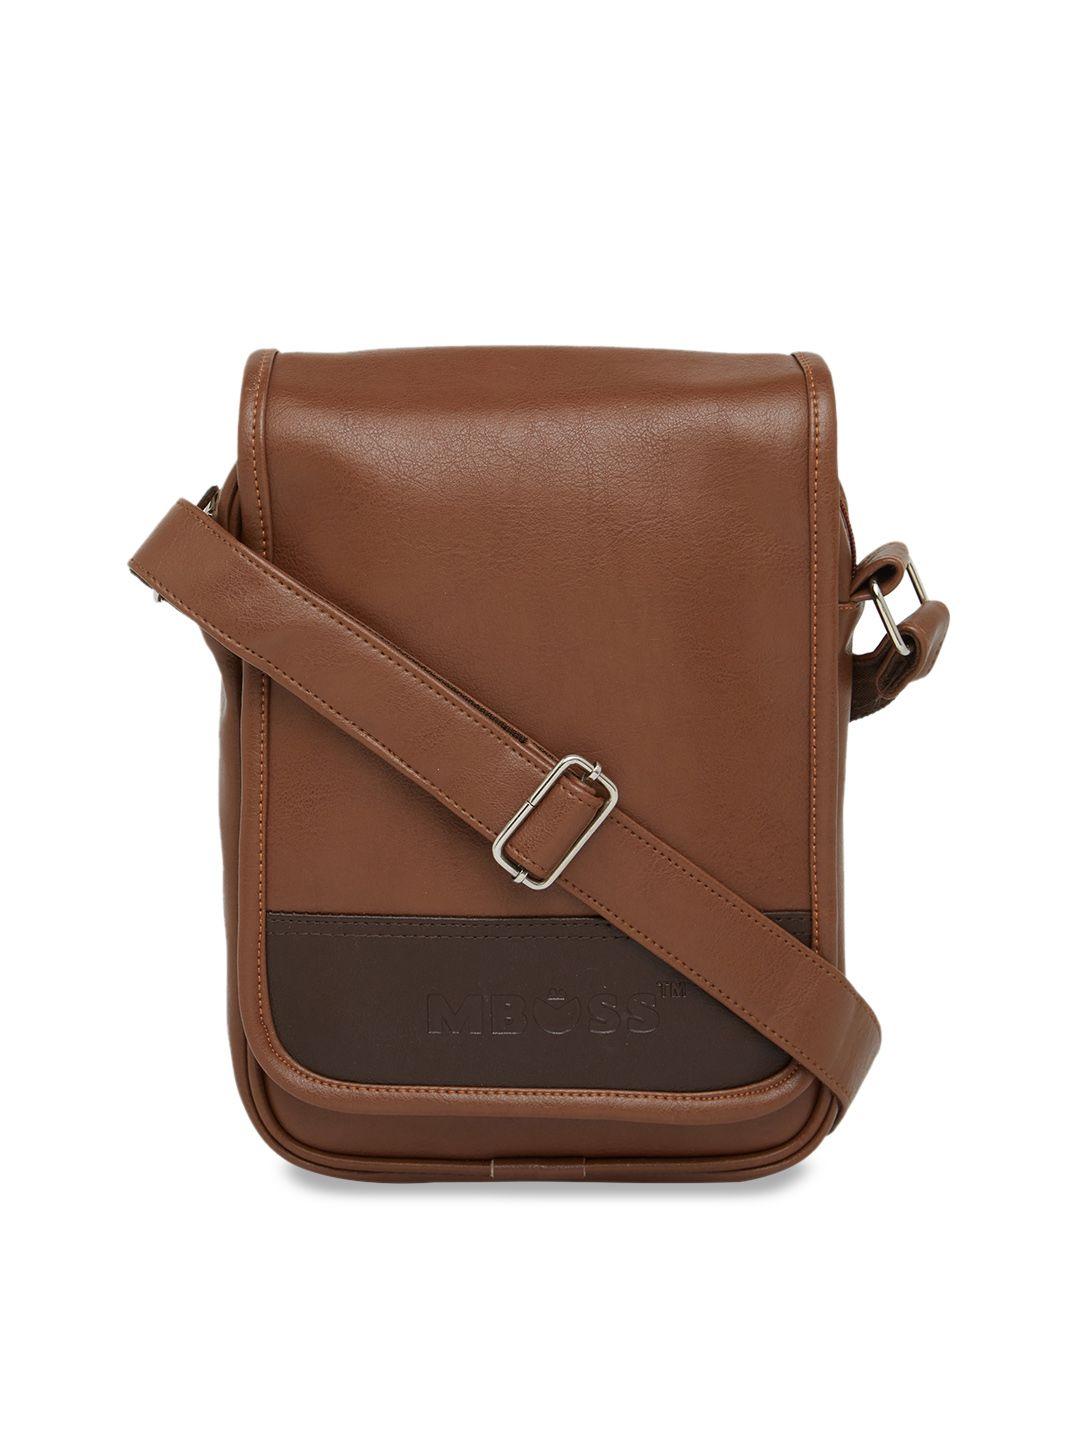 mboss unisex tan brown solid messenger bag